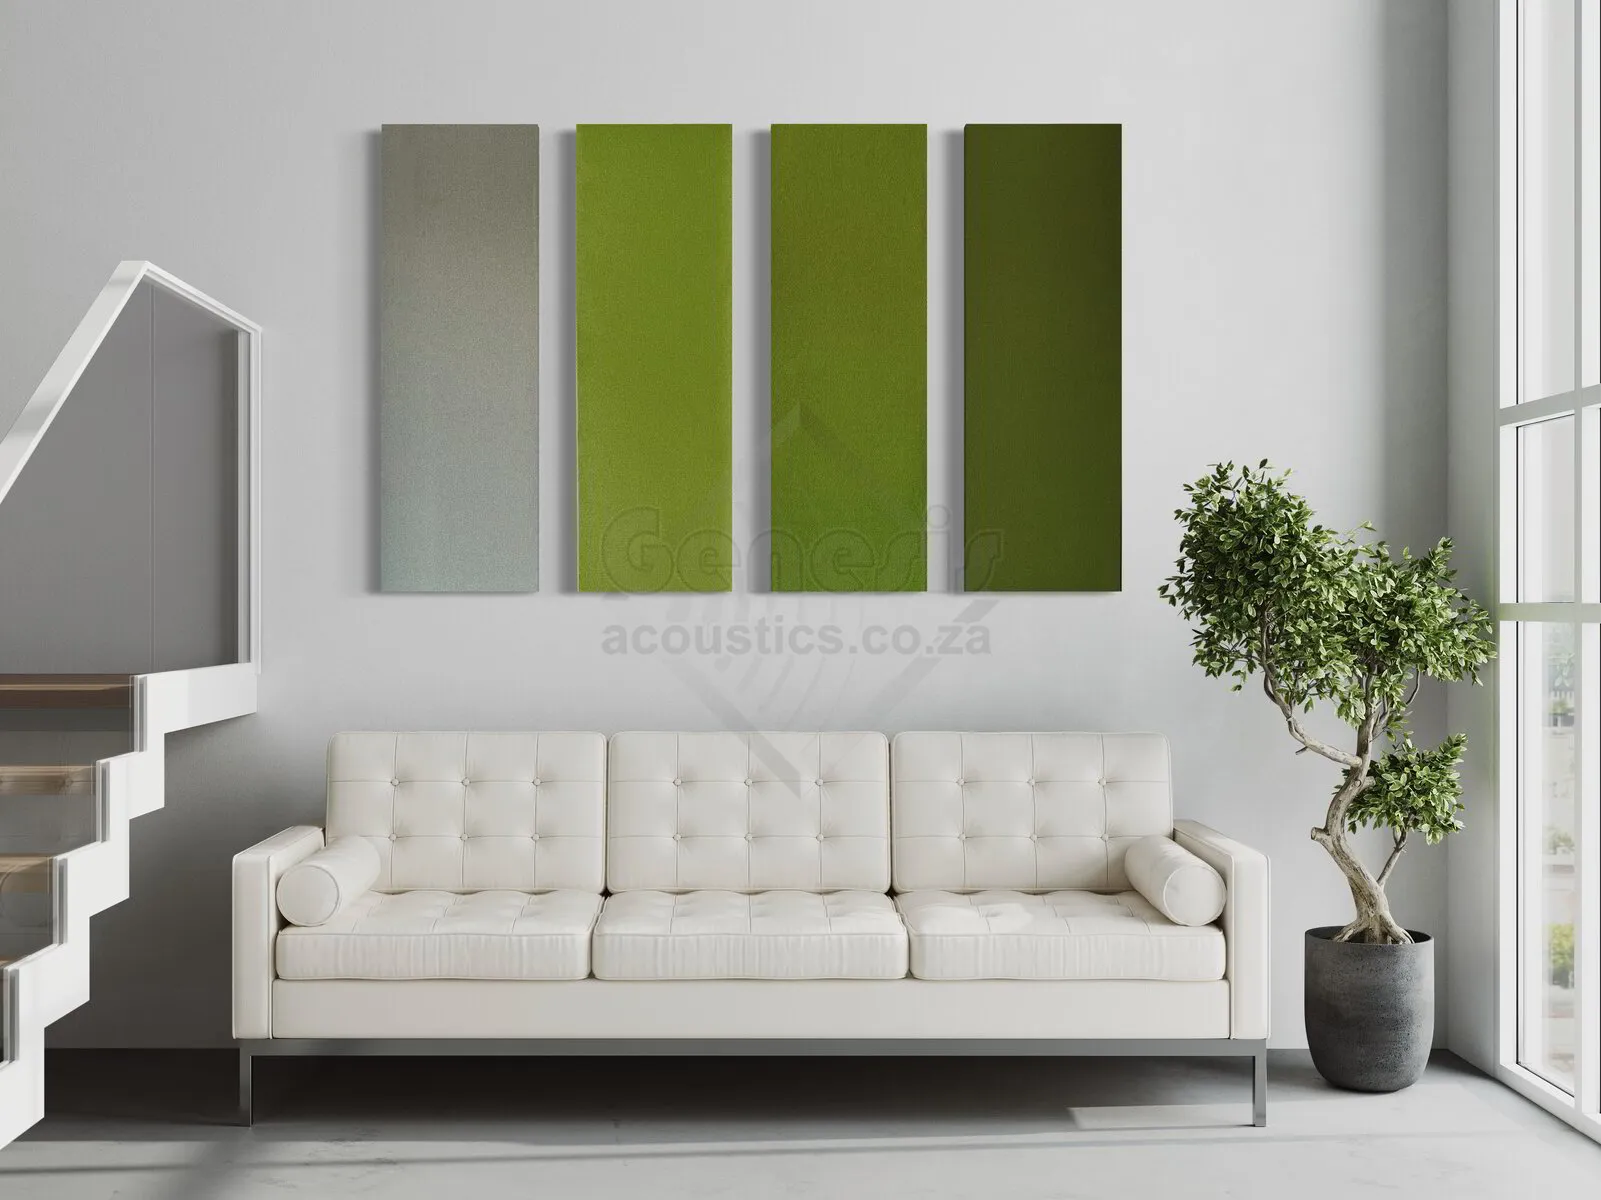 S5 Pro Acoustic Wall Panels - 120cm x 40cm Set of 4 - Spring Time Colour Combo